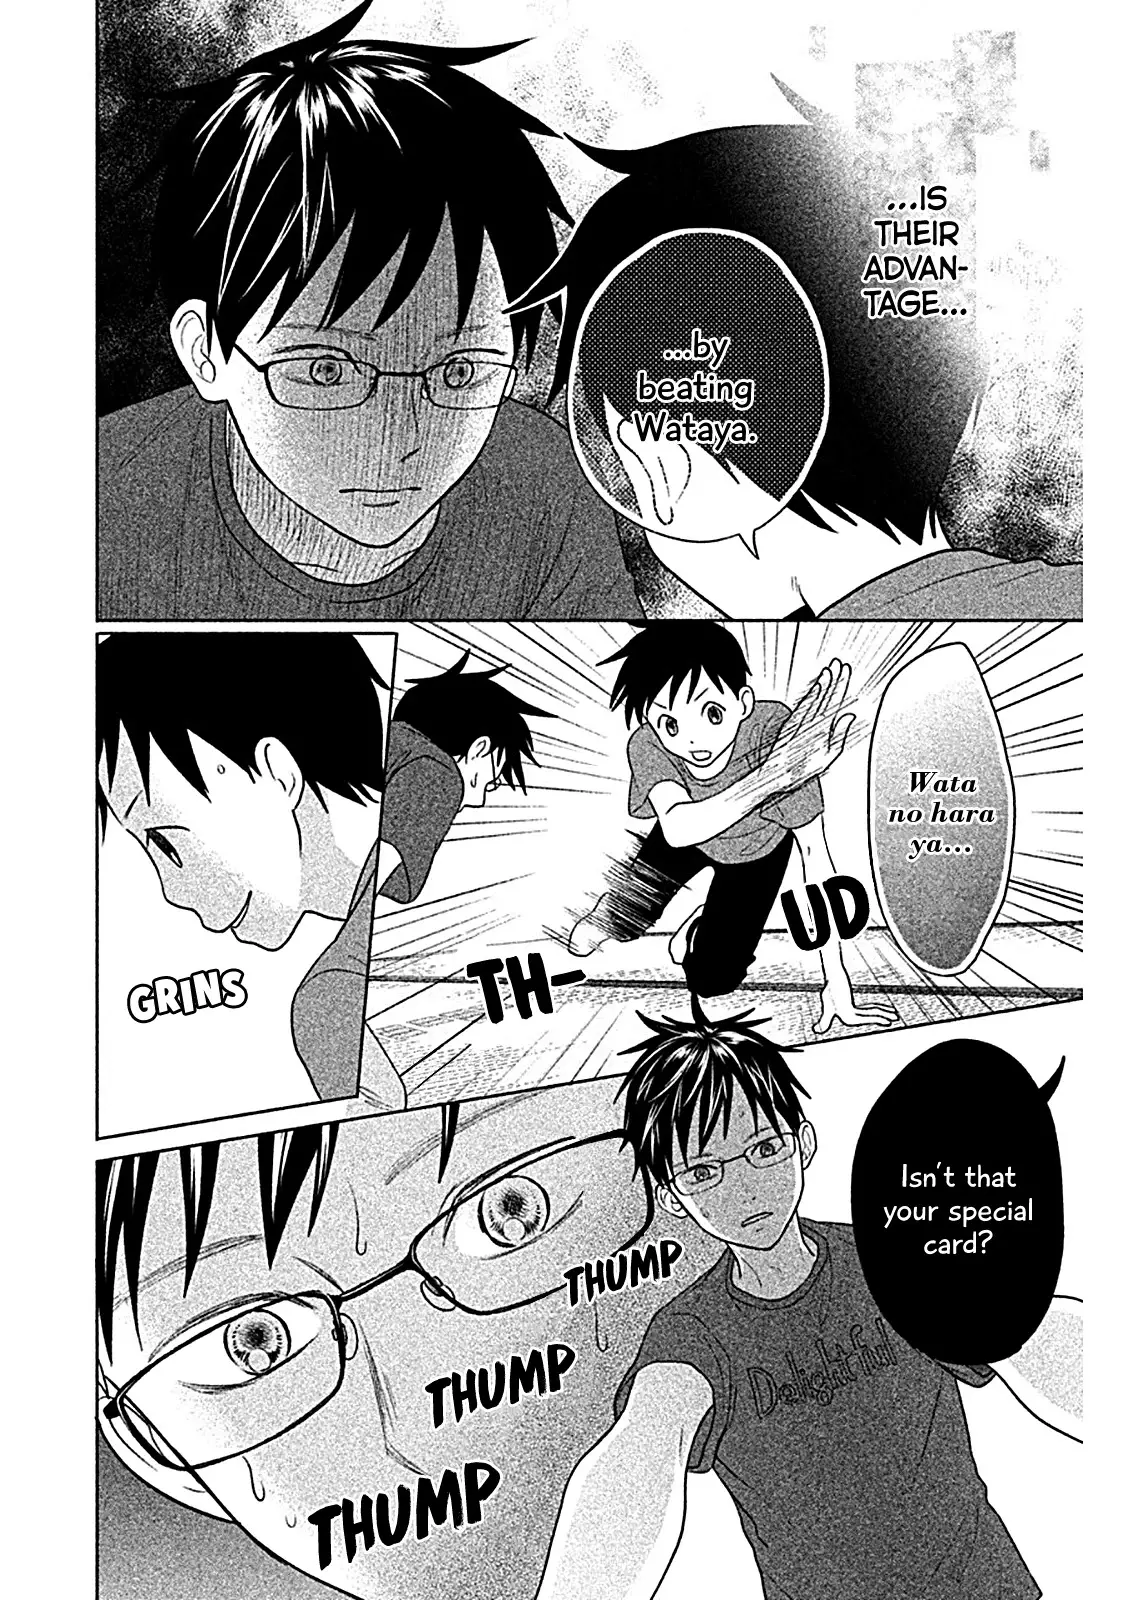 Chihayafuru: Middle School Arc - 10 page 13